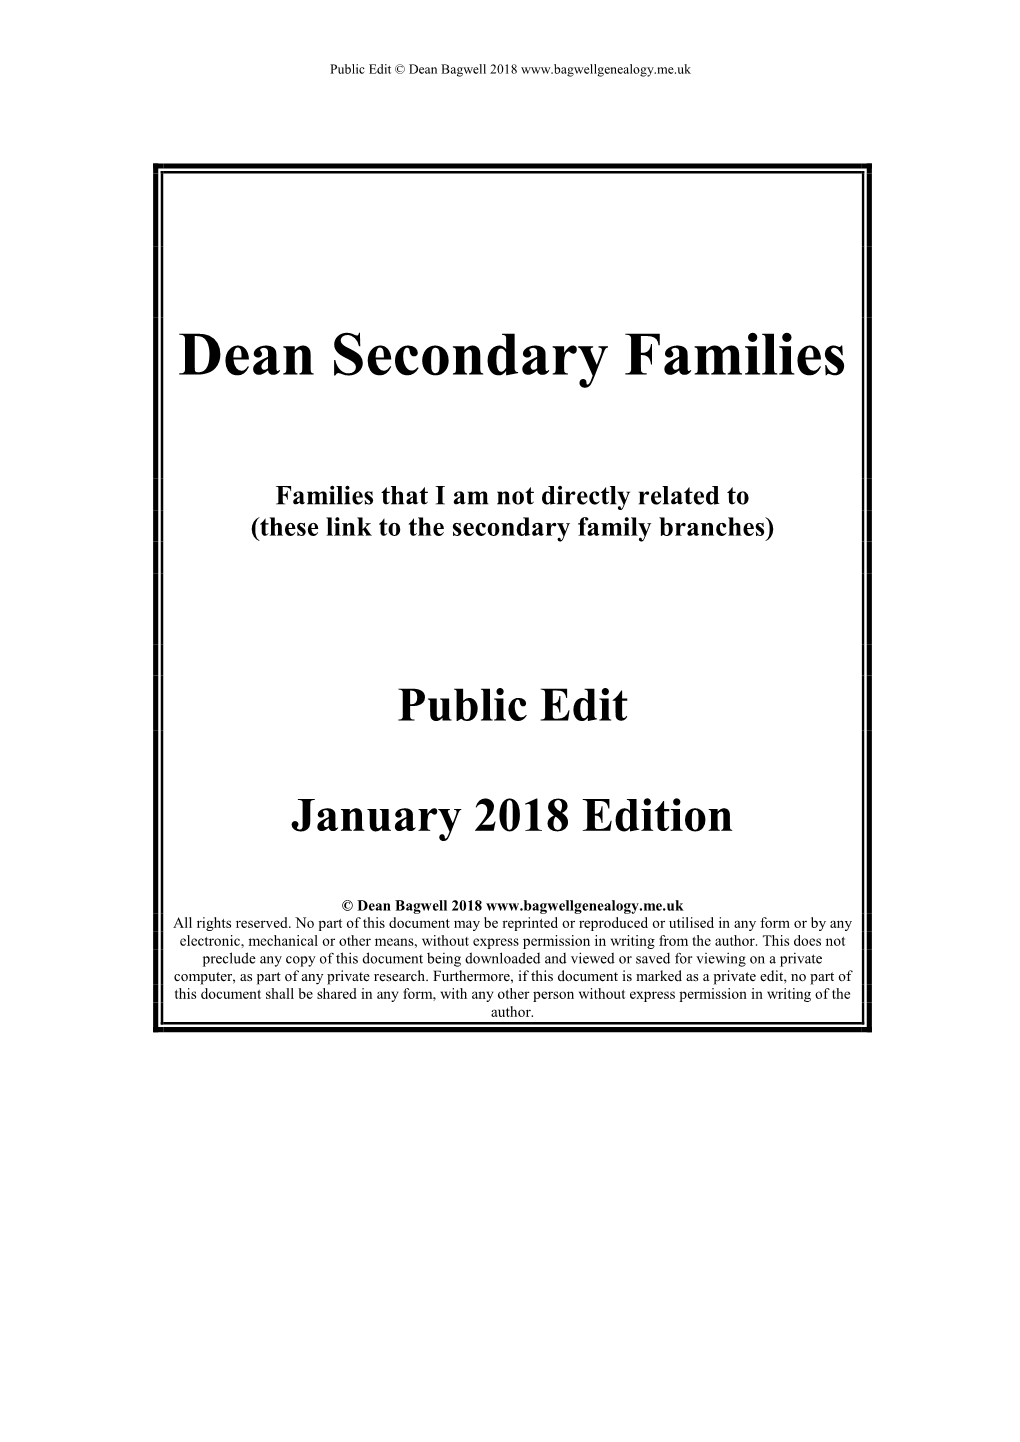 Dean Secondary Families